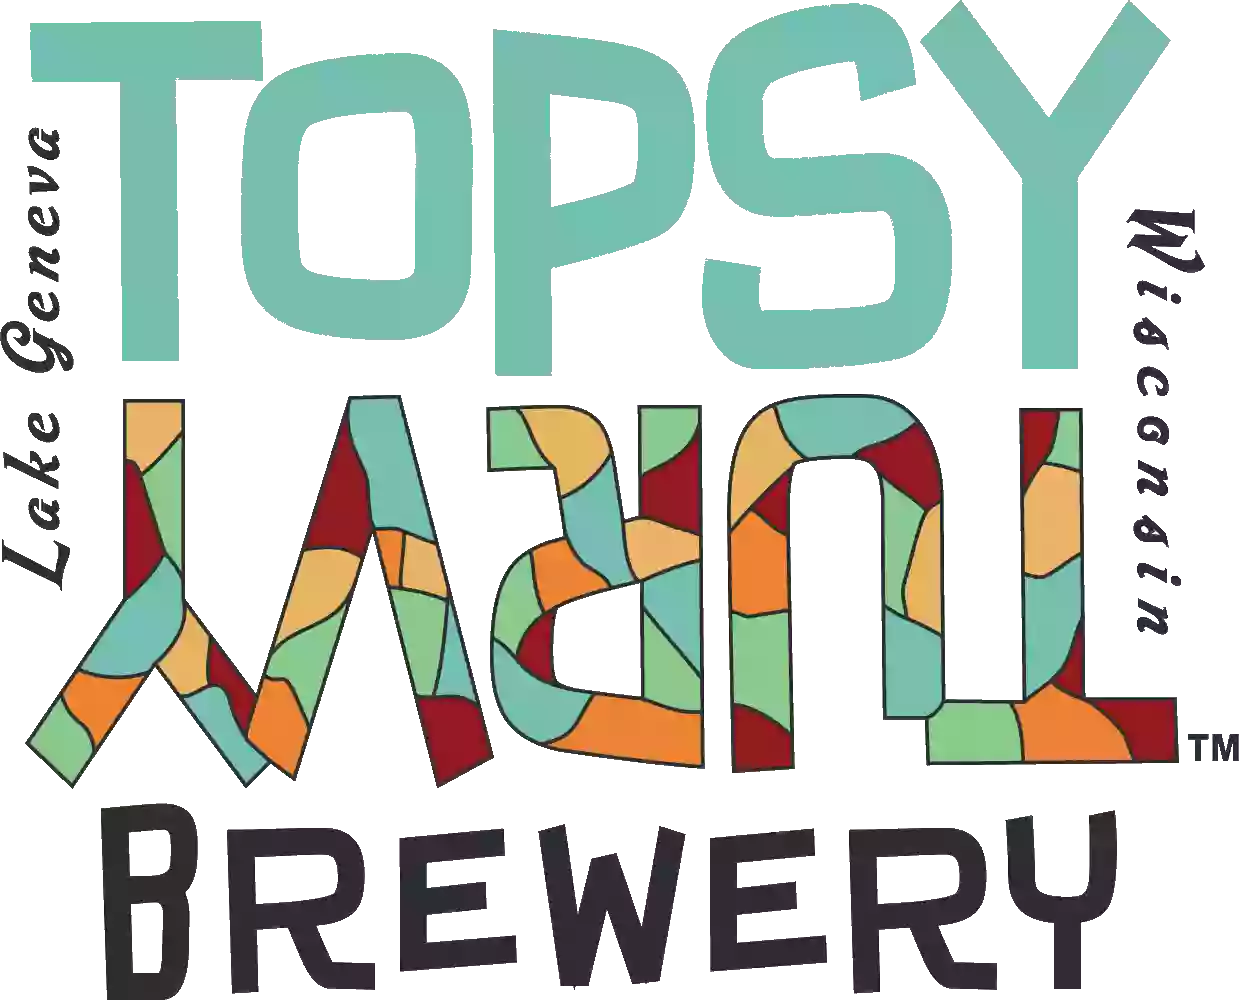 Topsy Turvy Brewery